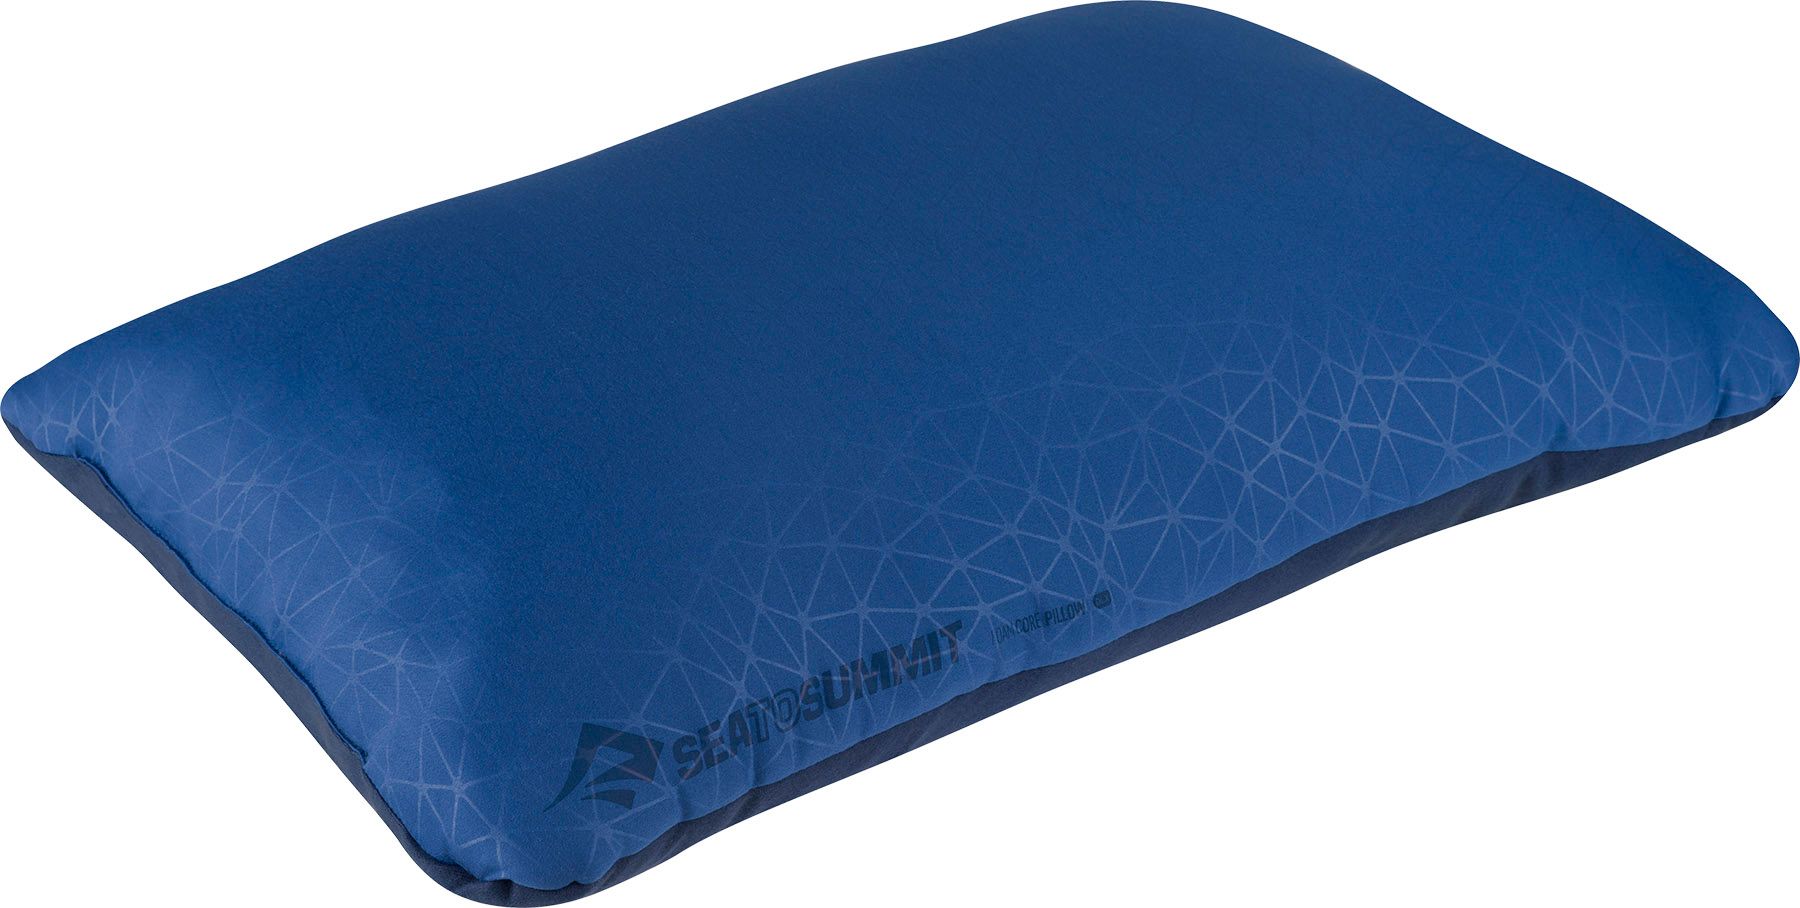 Photos - Bed Linen Sea To Summit Deluxe Foam Core Pillow, Navy Blue 21S2SUFMCRPLLWDLXCSL 